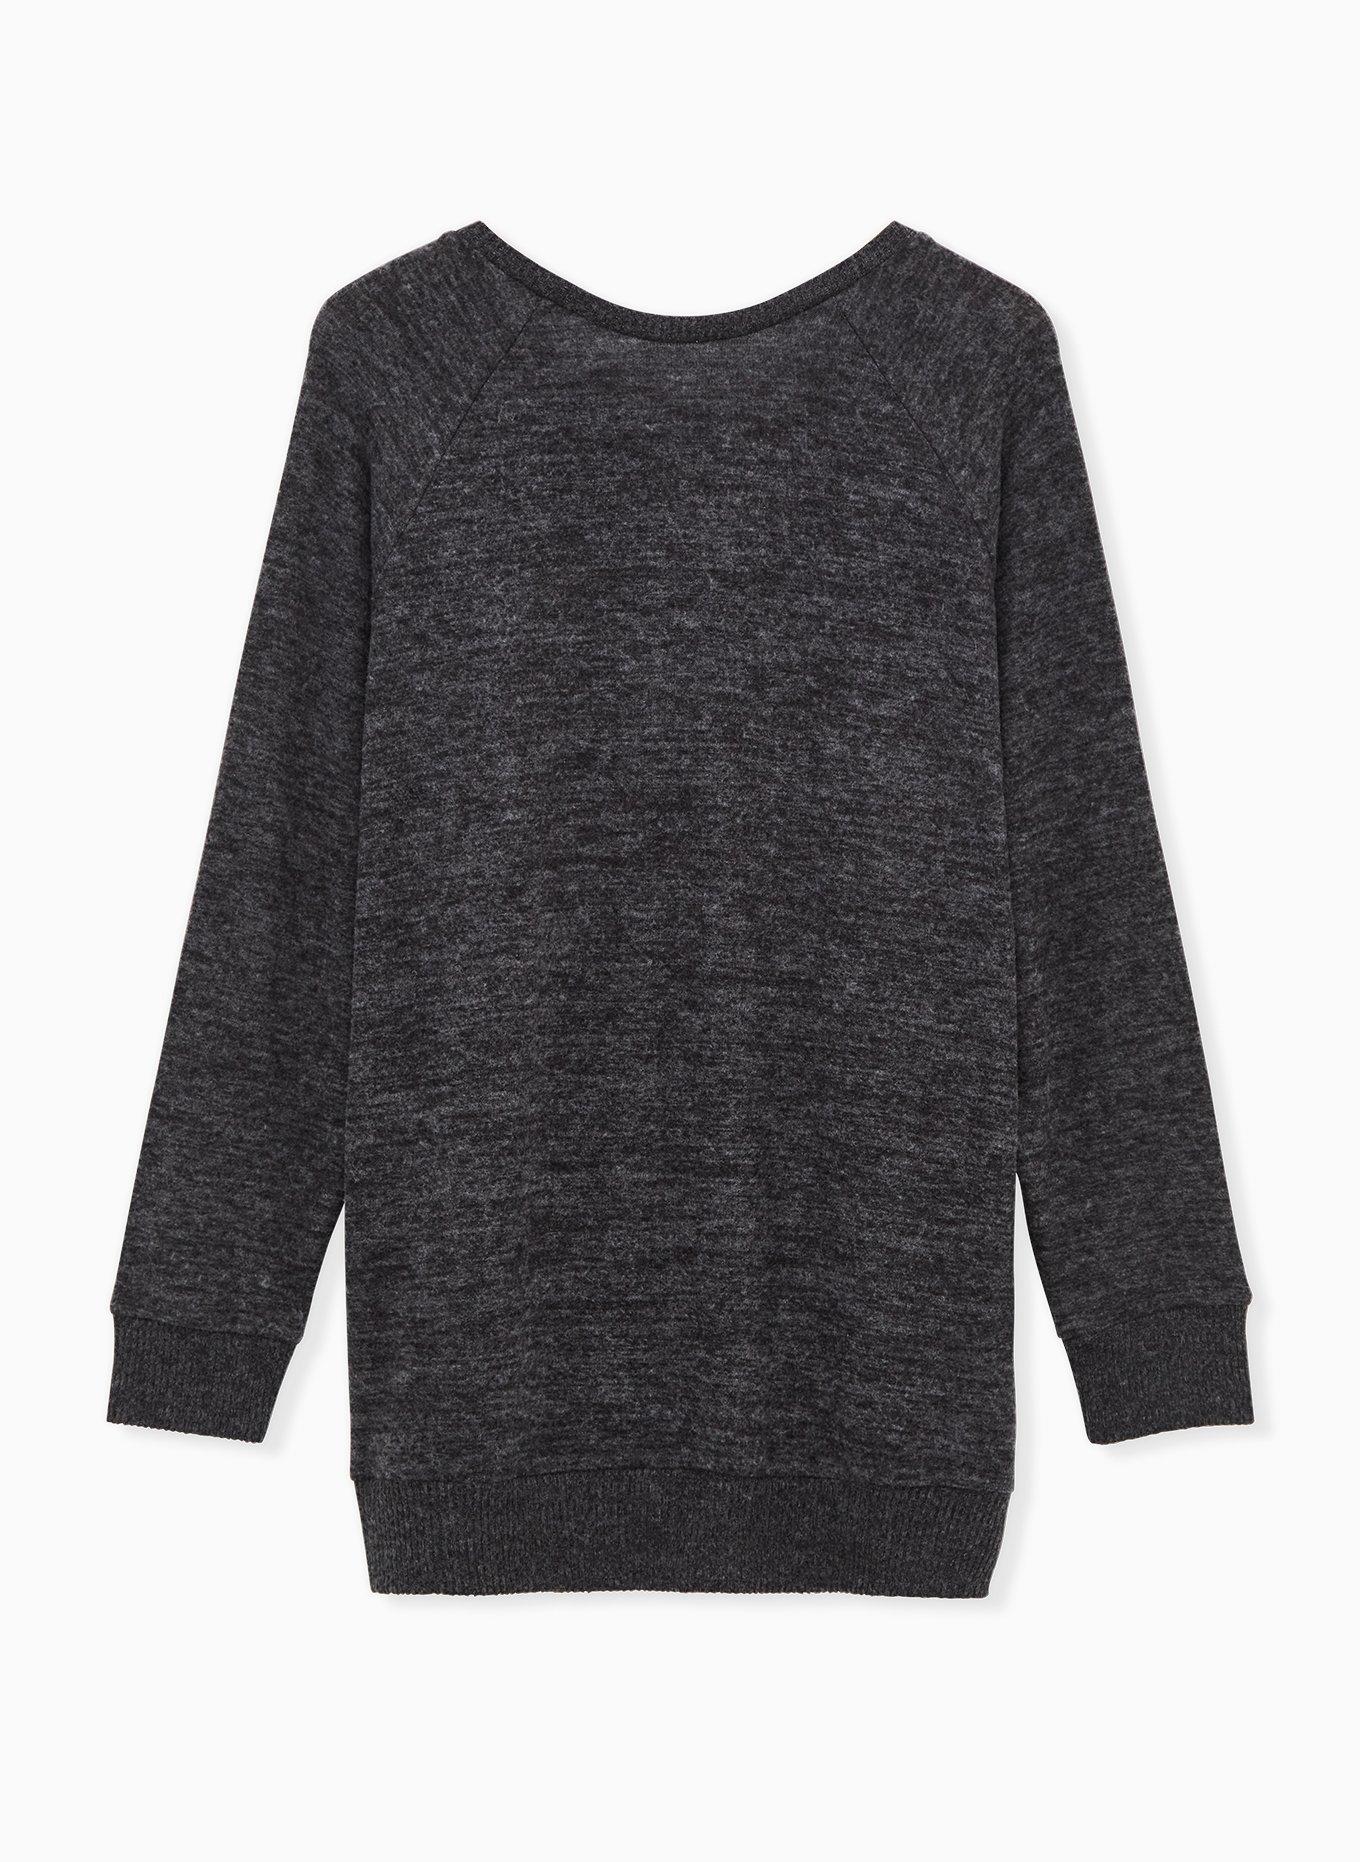 Plus Size - Breast Cancer Awareness - Nope Not Today Super Soft Plush Black  Sweatshirt - Torrid